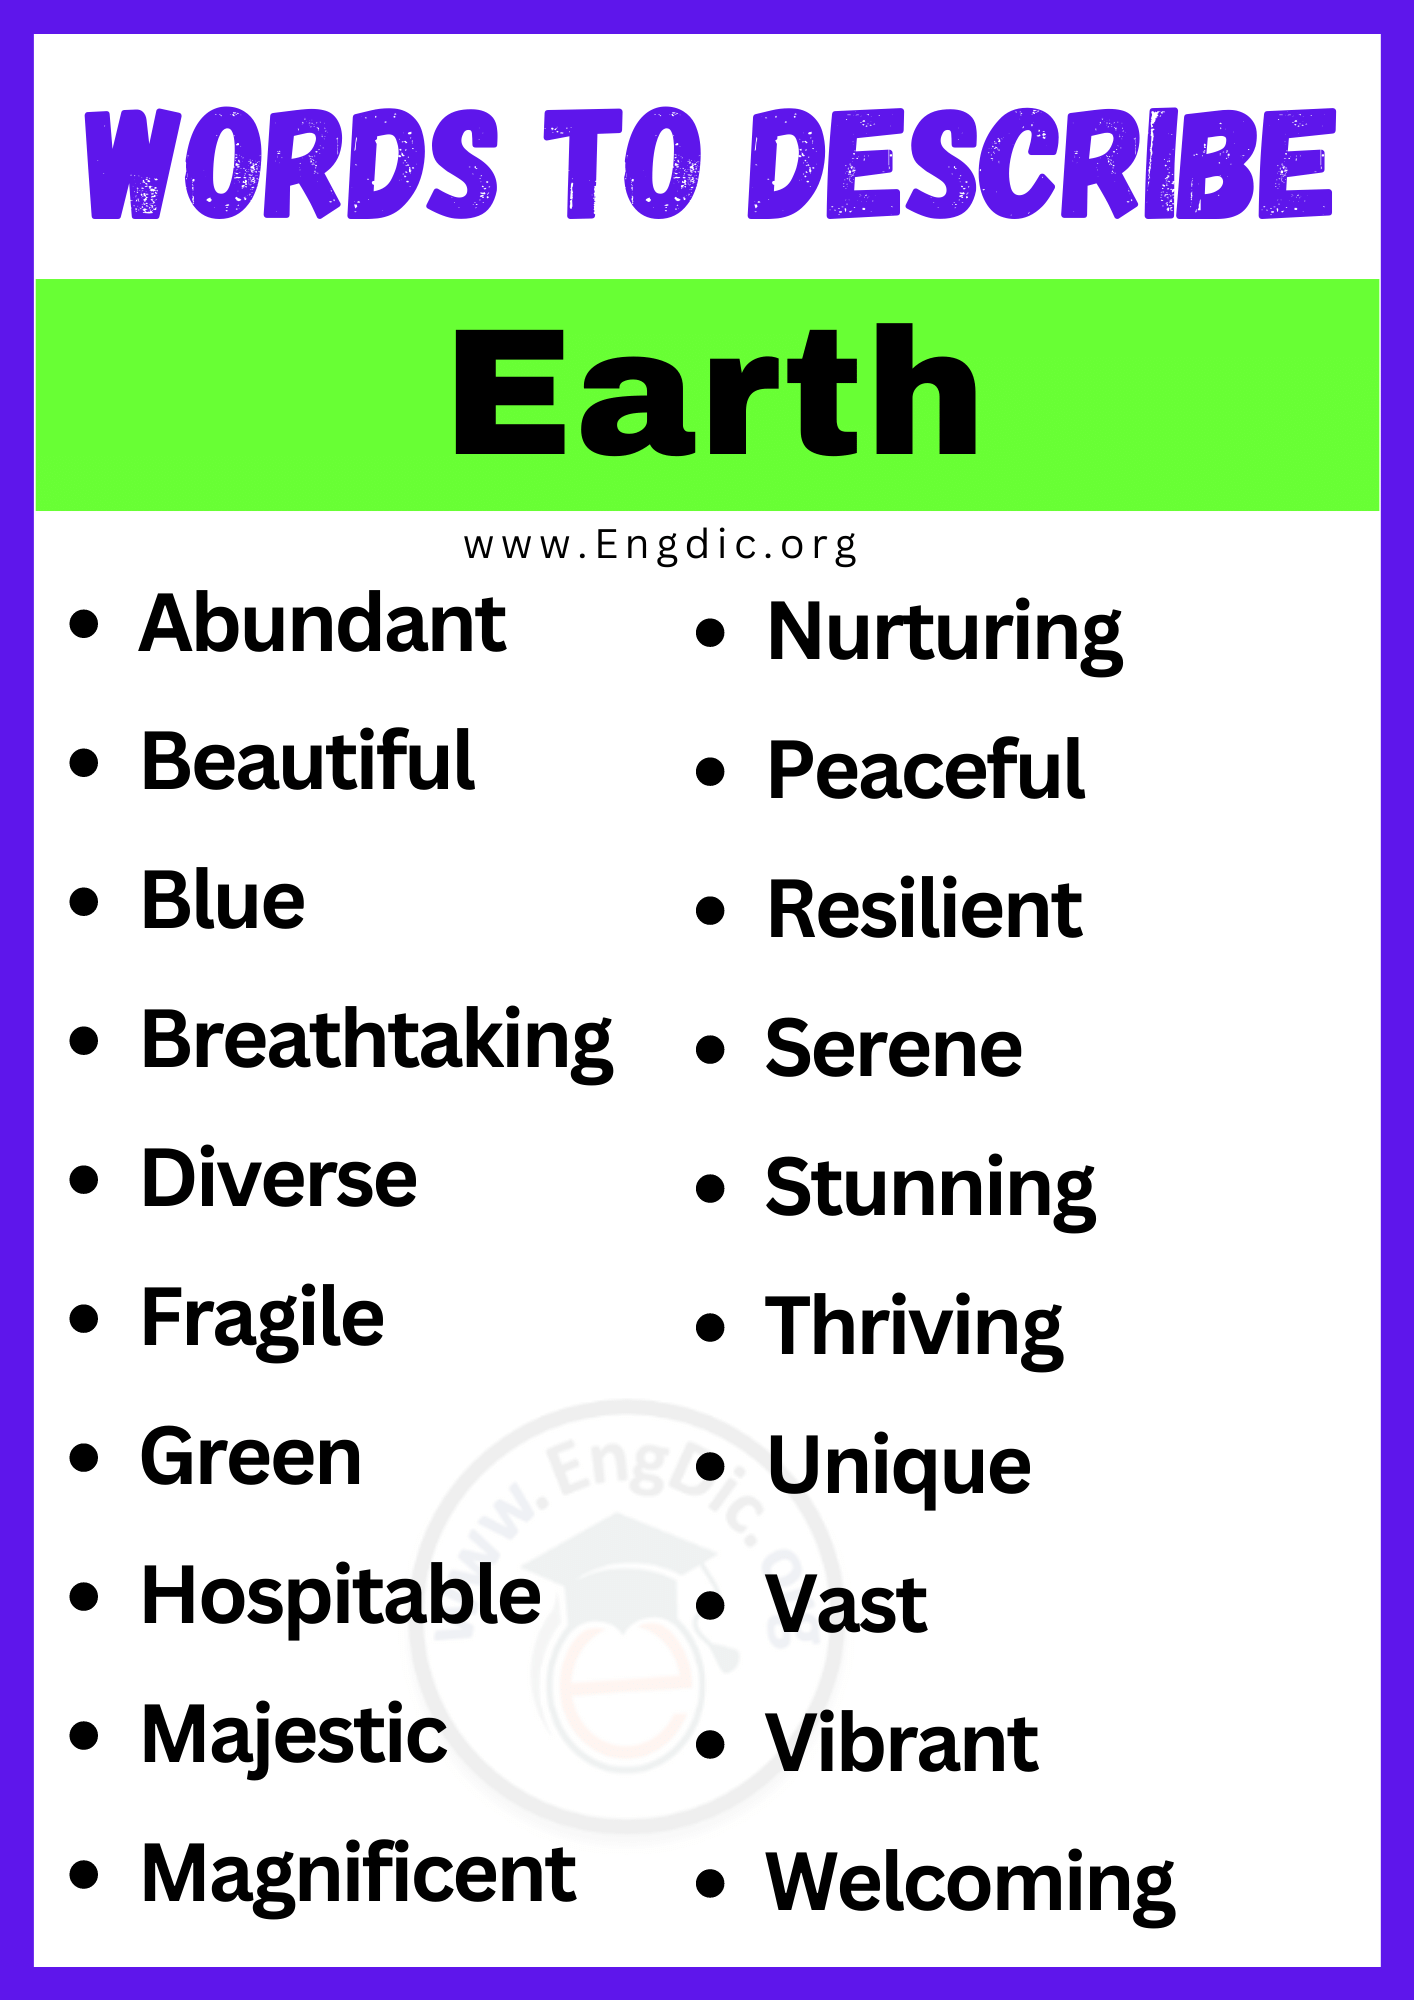 Words to Describe Earth